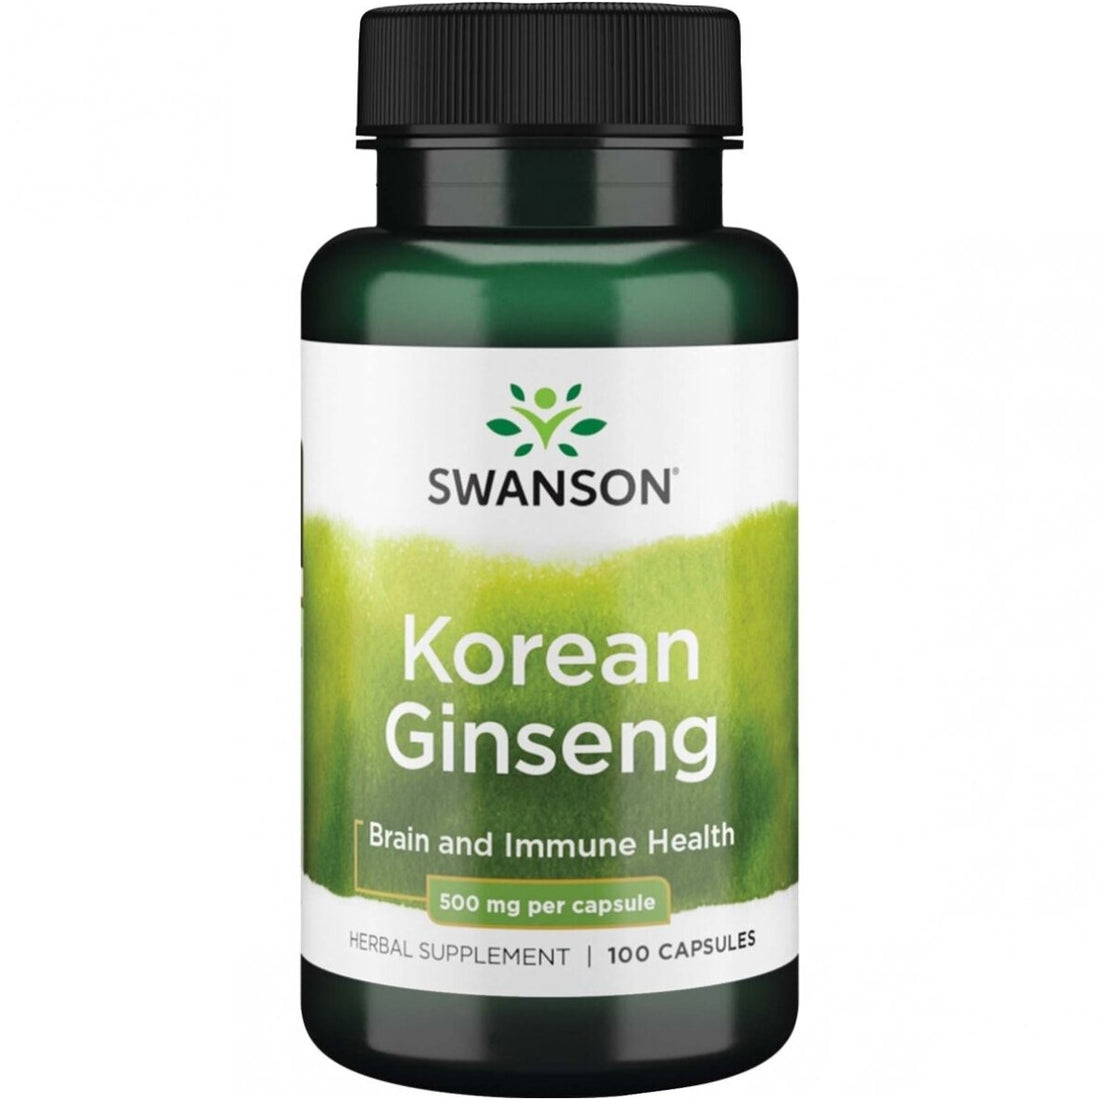 SWANSON Ženšenis (Ginseng) 500 mg 100 kaps.